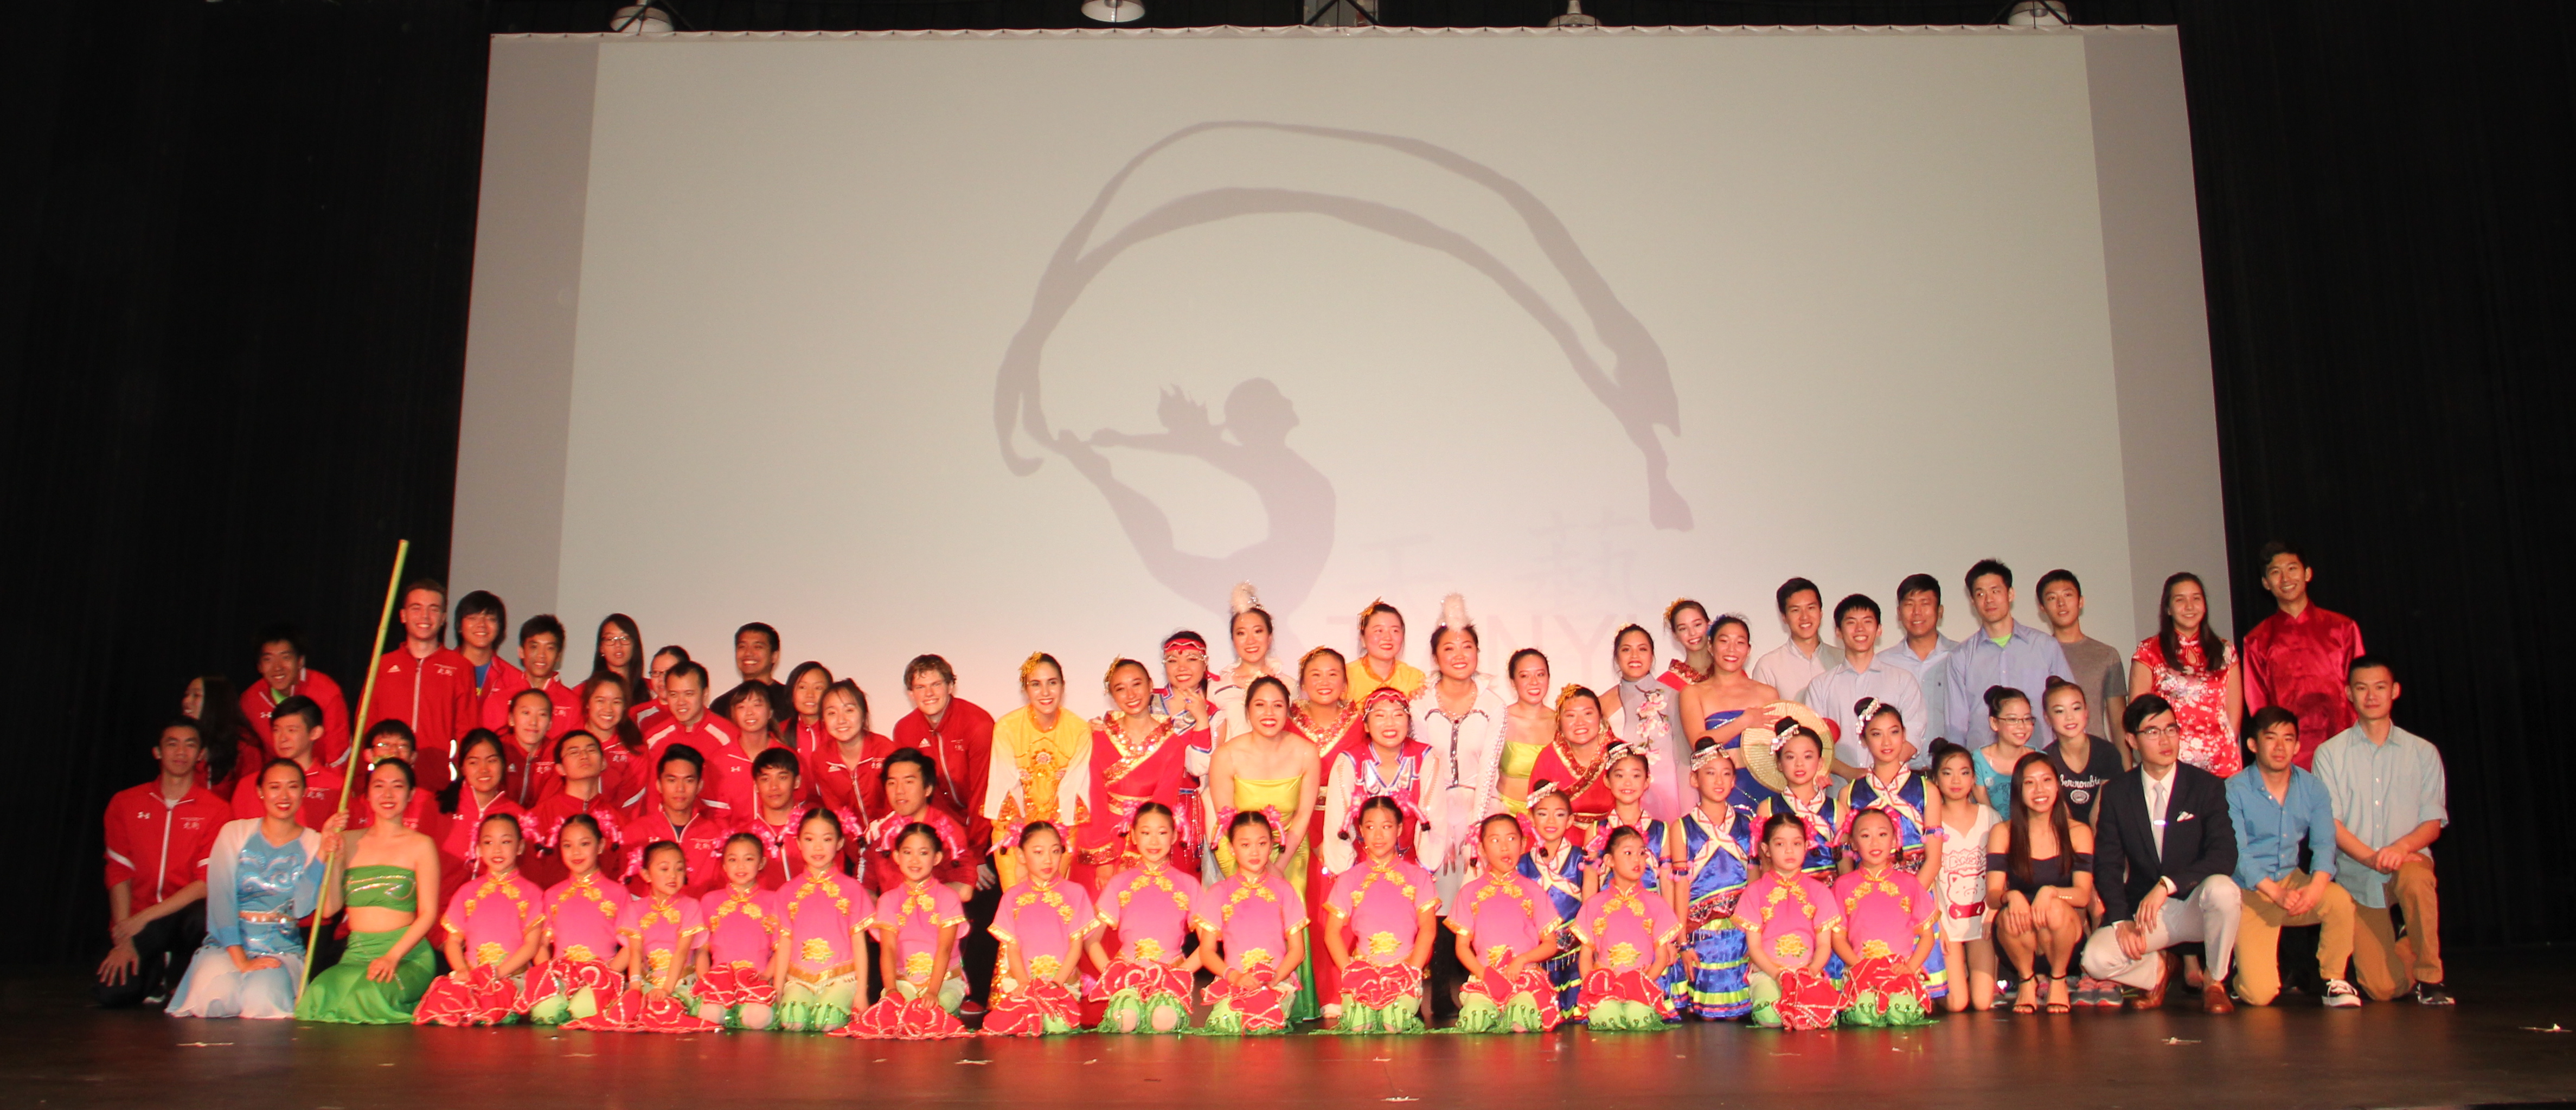 Tianyi's 5th Annual Showcase